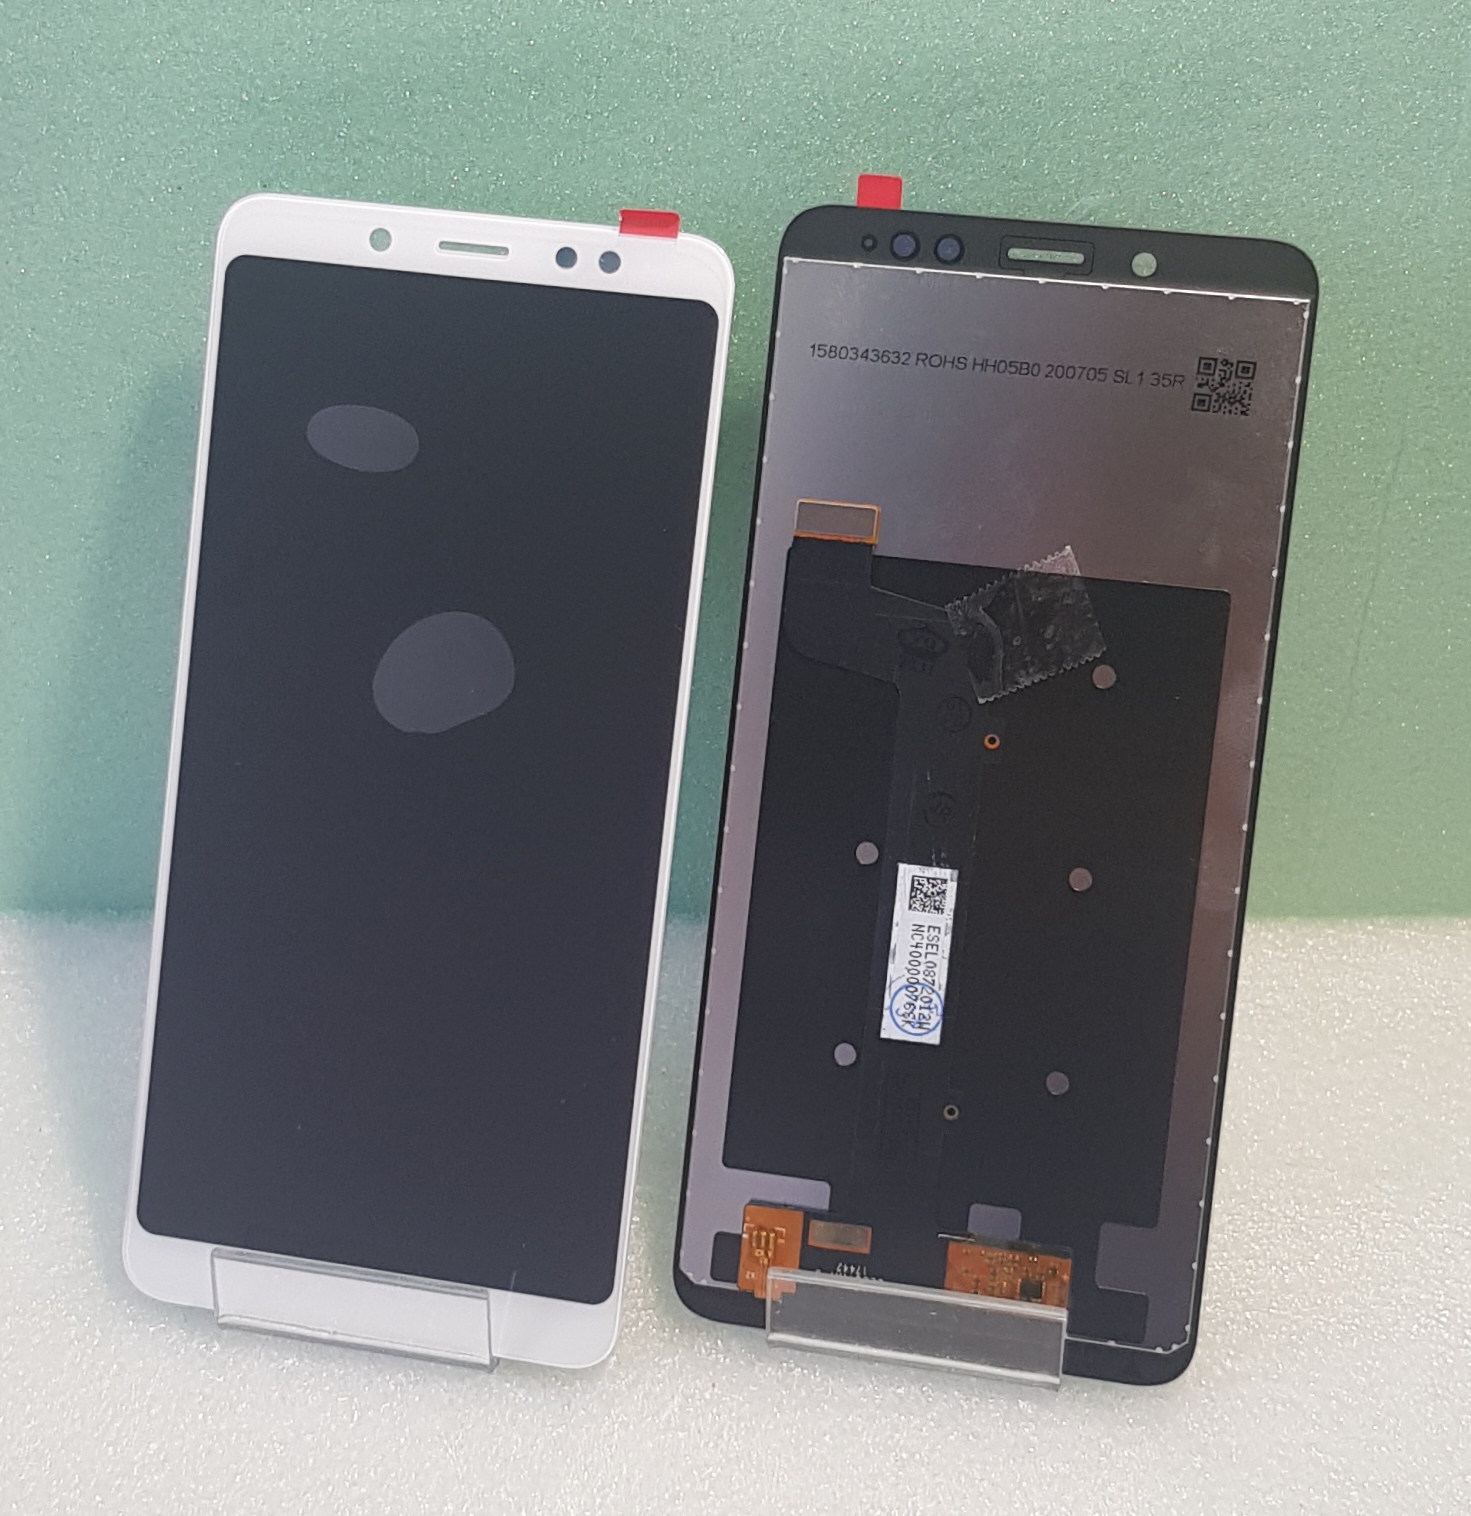 Xiaomi Redmi Note 5 M1803e7sg